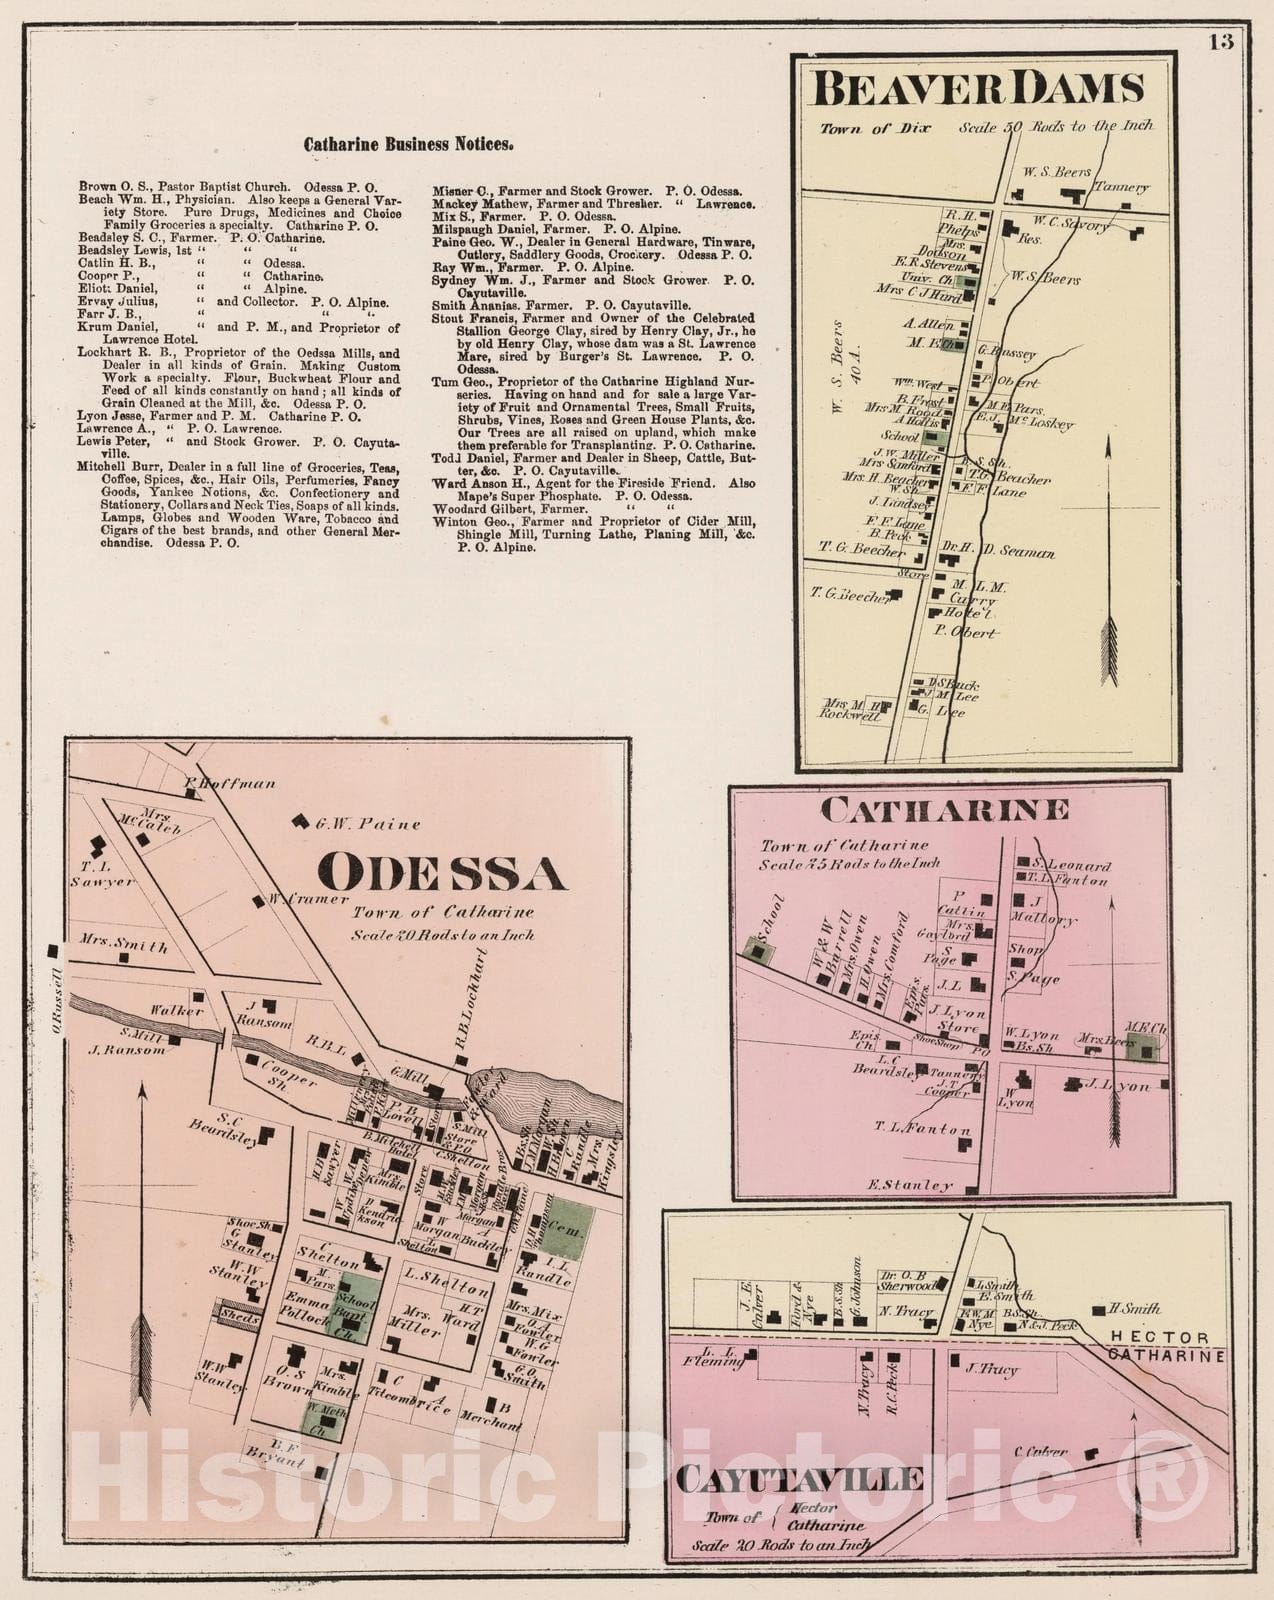 Historic Map : 1874 Odessa. Beaver Dams. Catherine. Cayutavillle, New York. - Vintage Wall Art